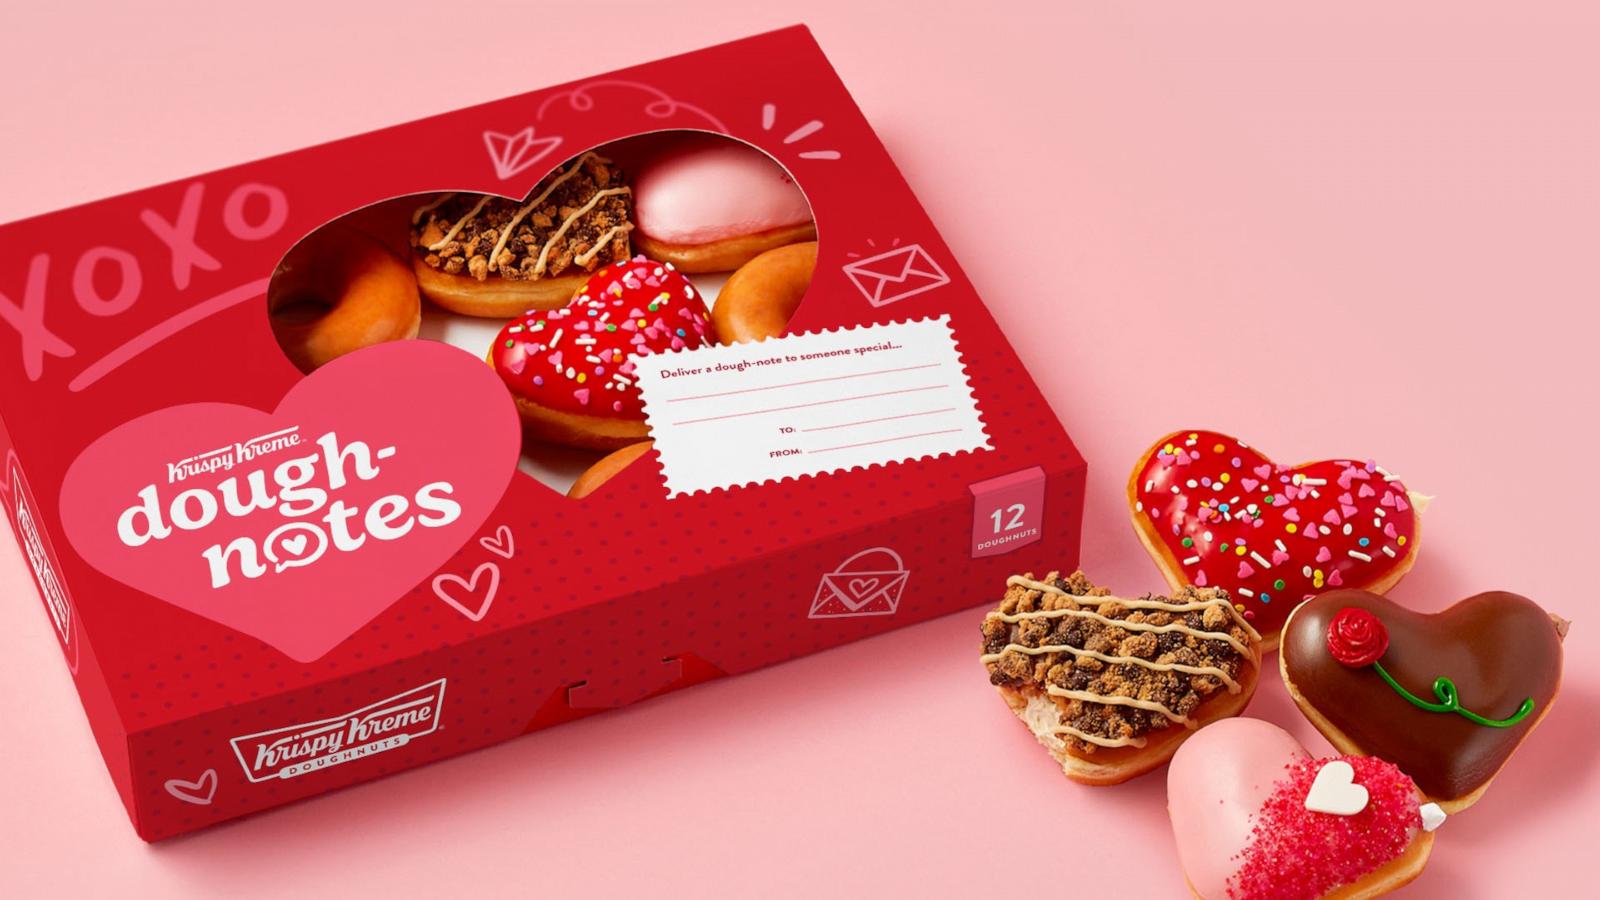 PHOTO: Four new festive doughnuts available at Krispy Kreme through Valentine’s Day.